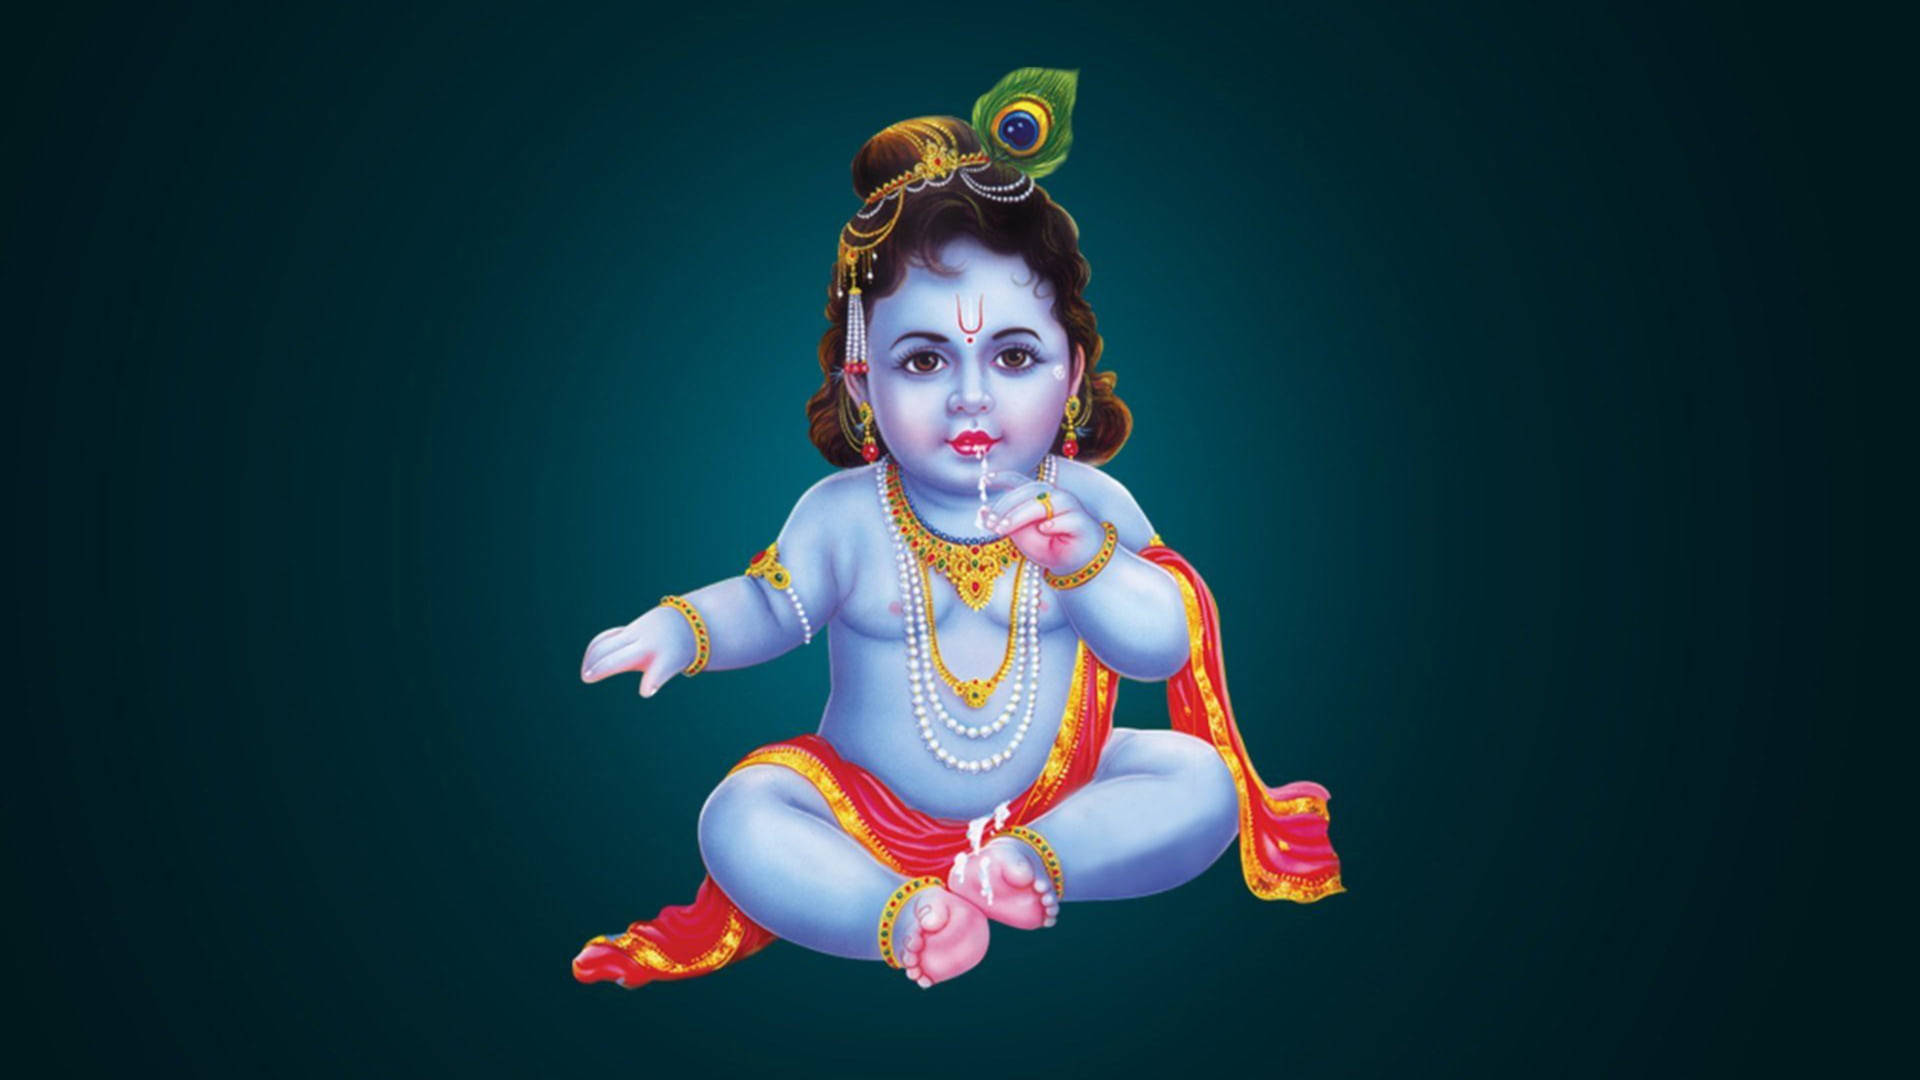 Full Body Of Baby Krishna 4k Wallpaper